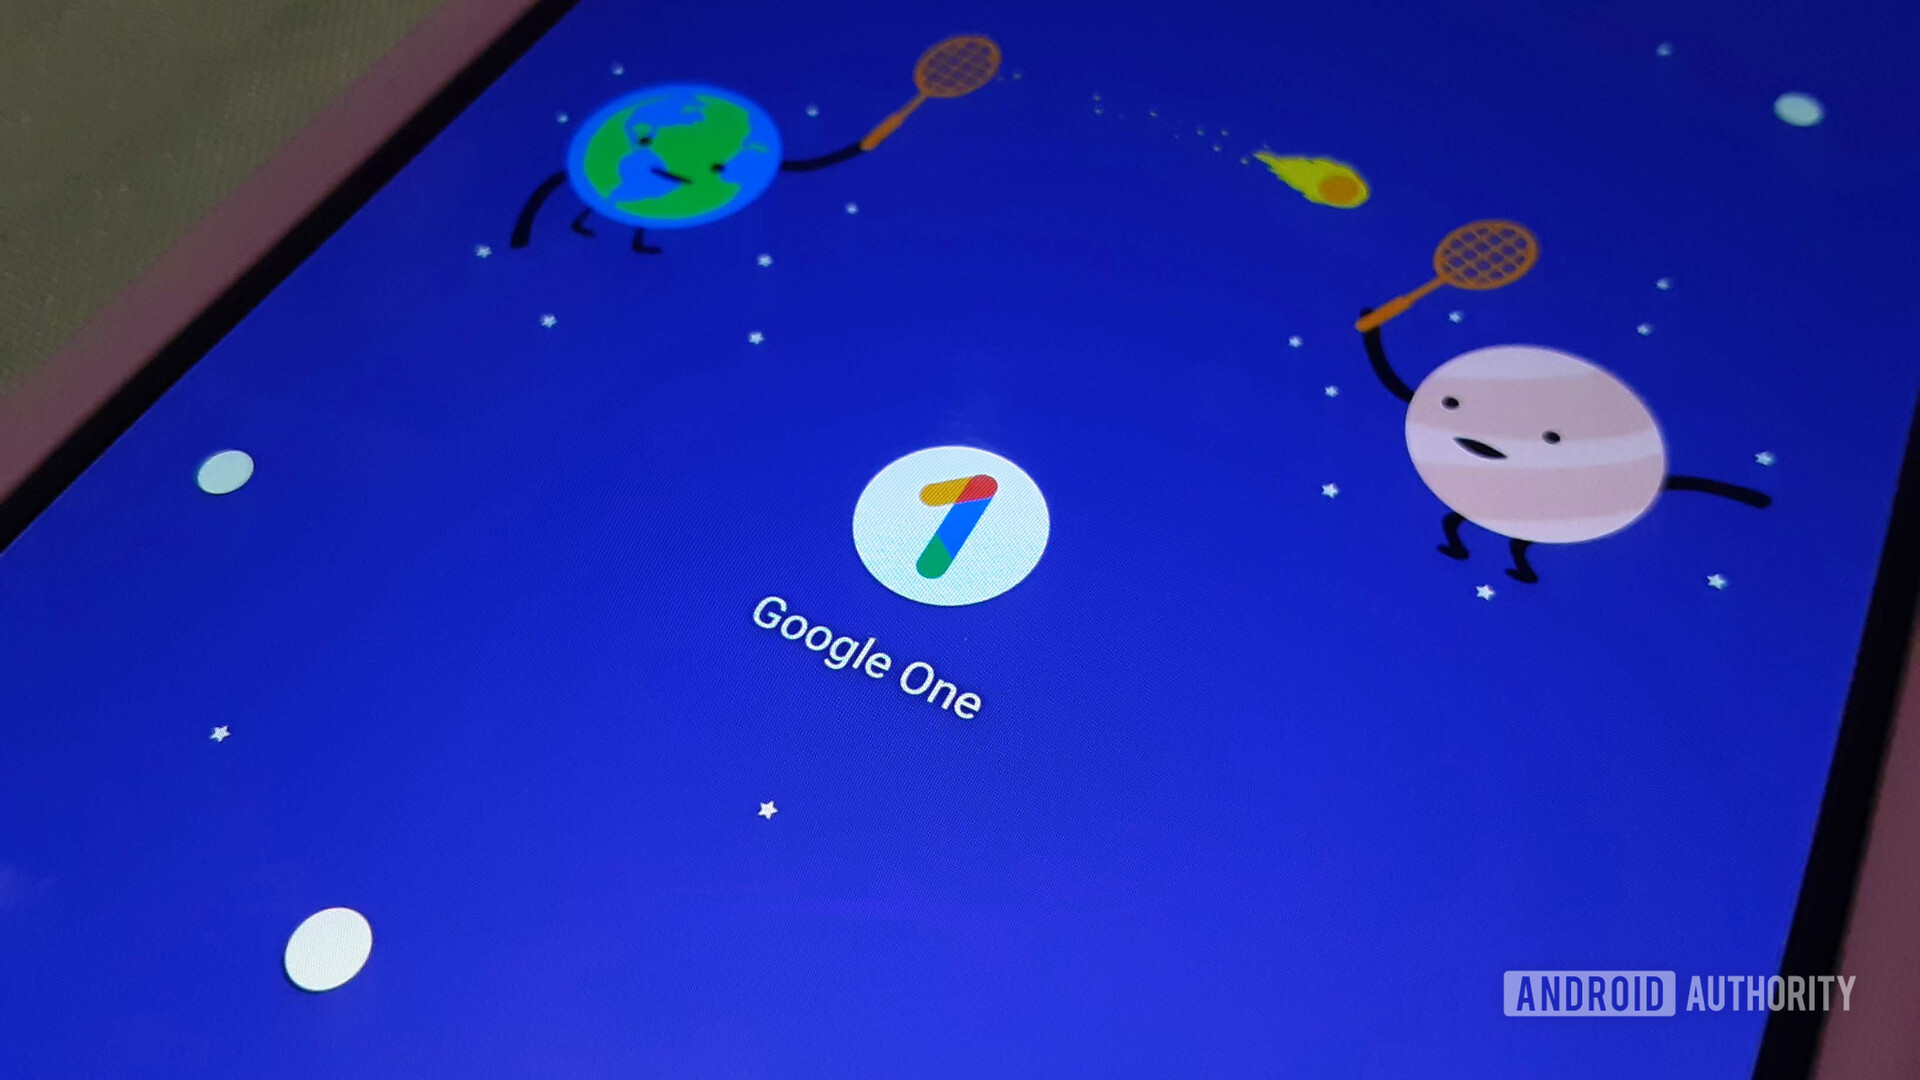 Google One app icon on the Google Pixel 3 XL homescreen